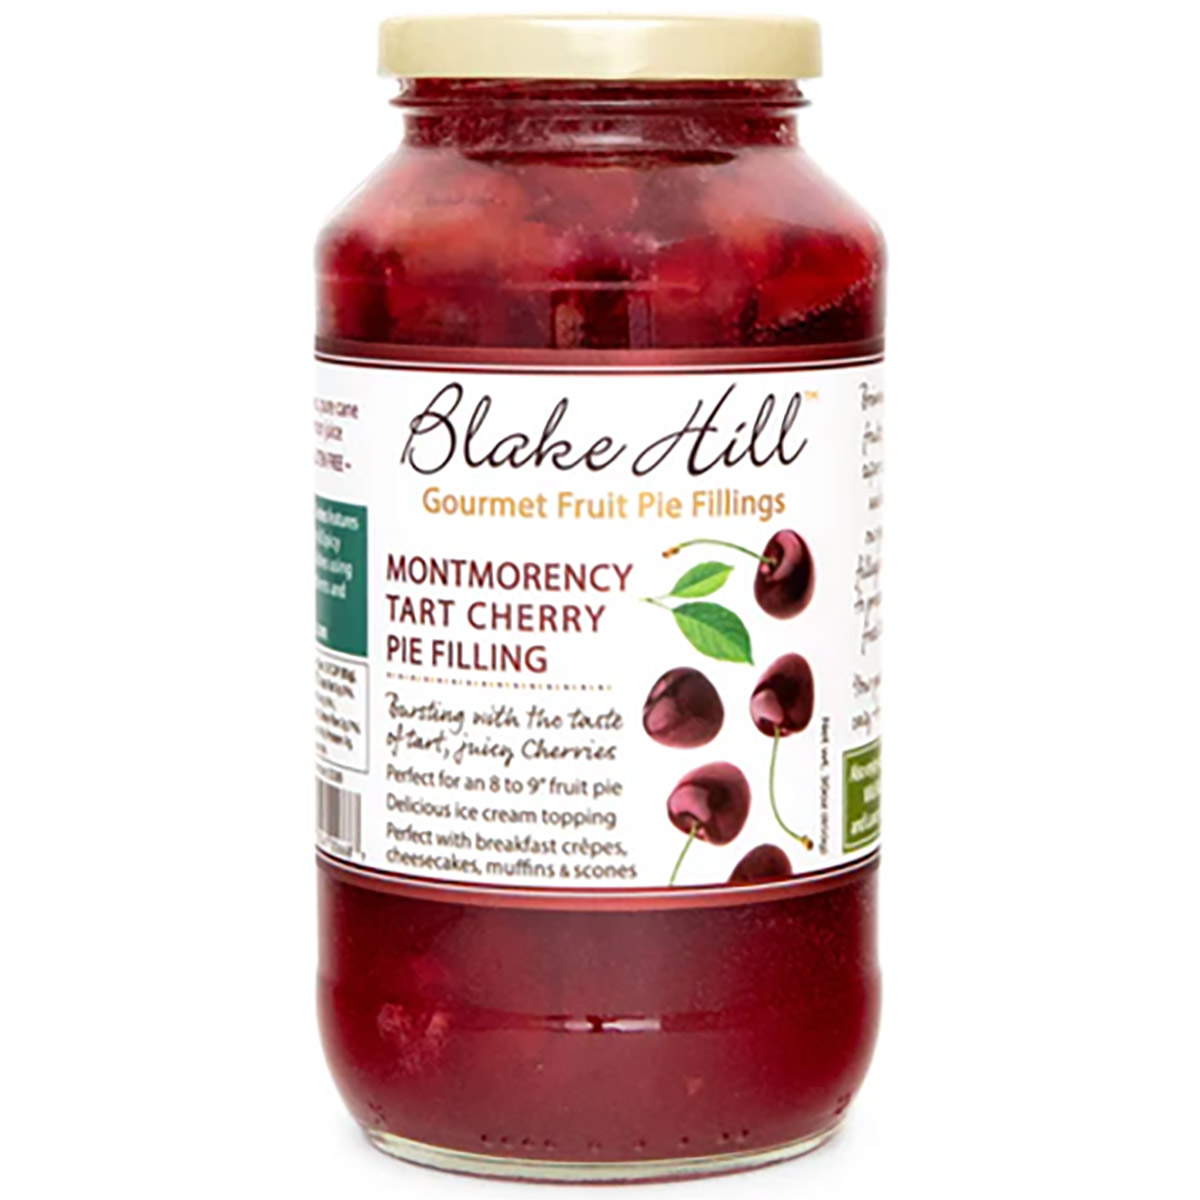 Blake Hill Montmorency Cherry Pie Filling